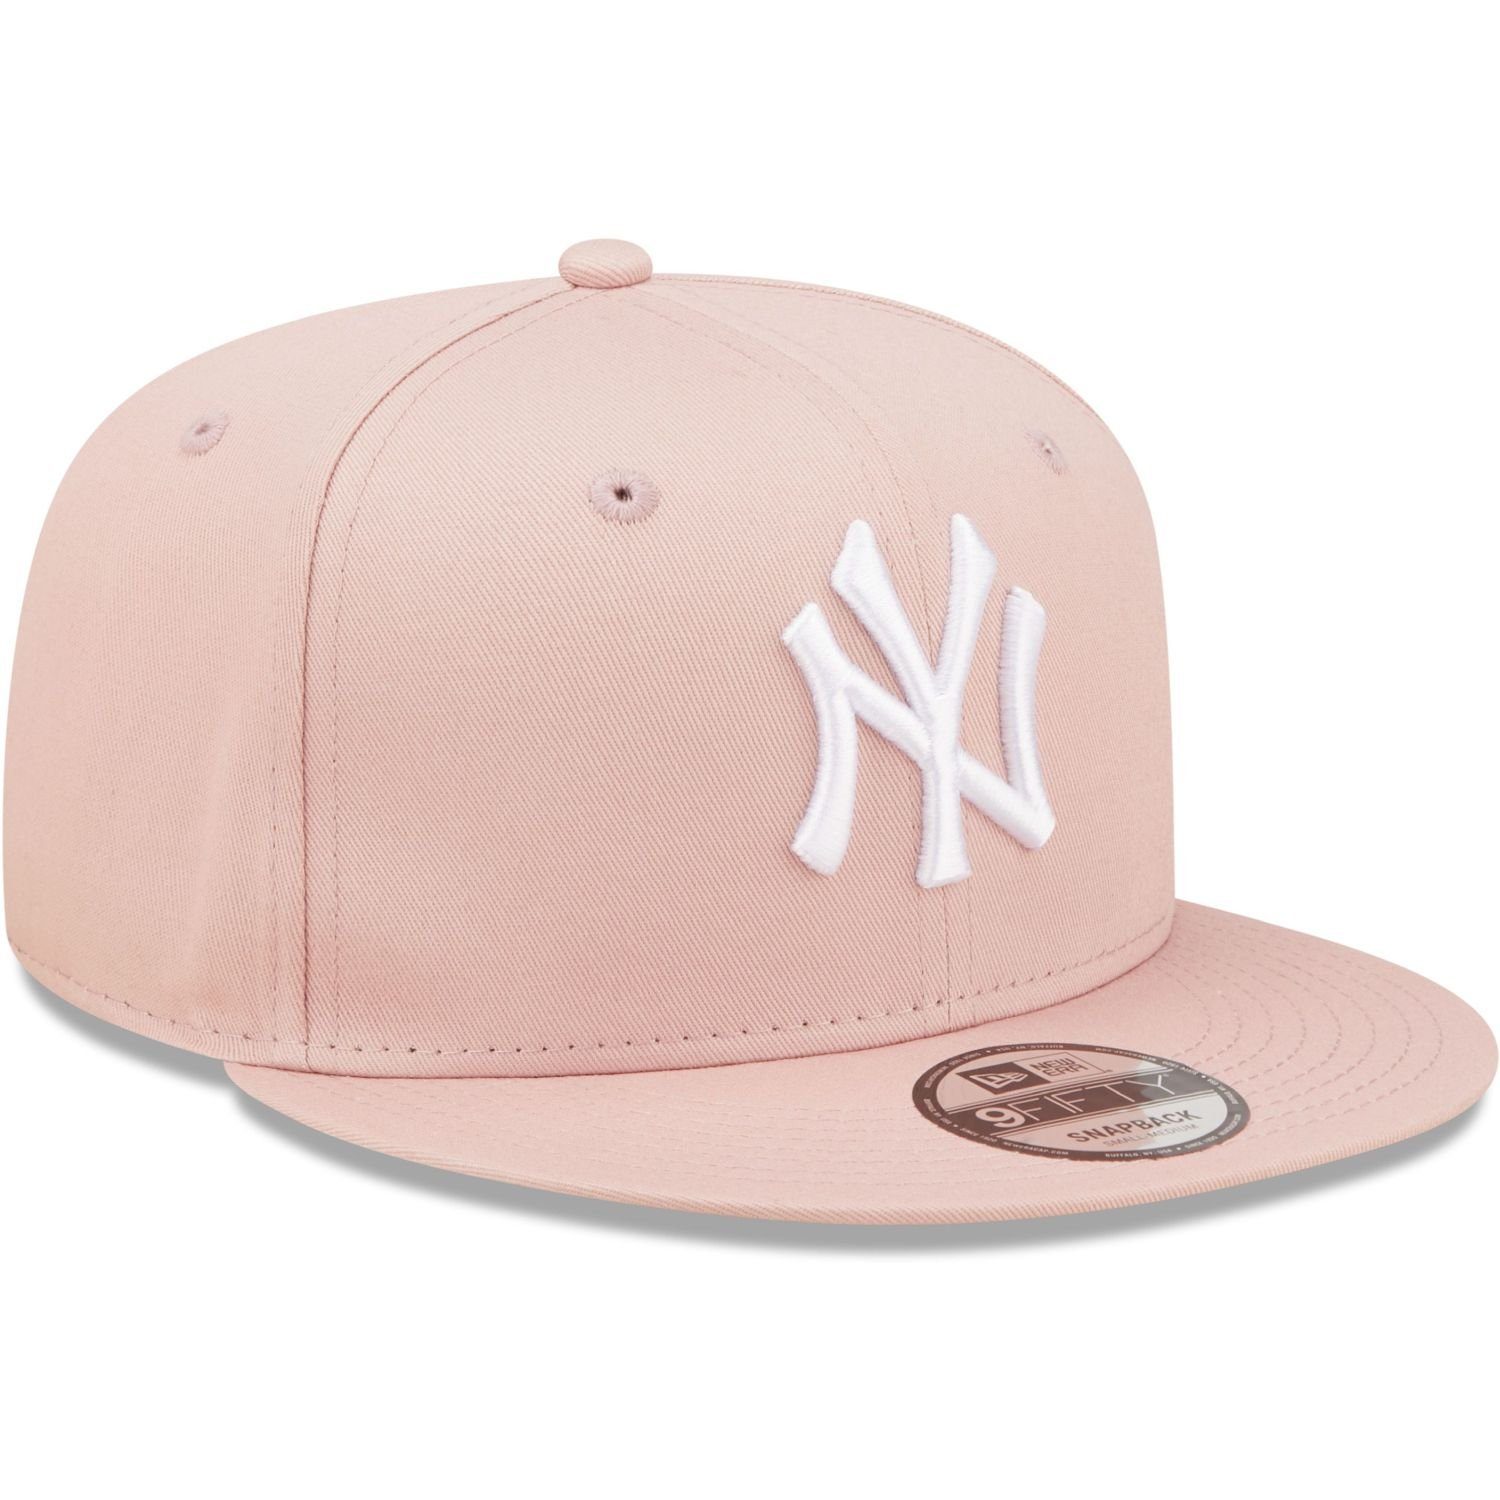 9Fifty Snapback Era New New York Yankees Cap